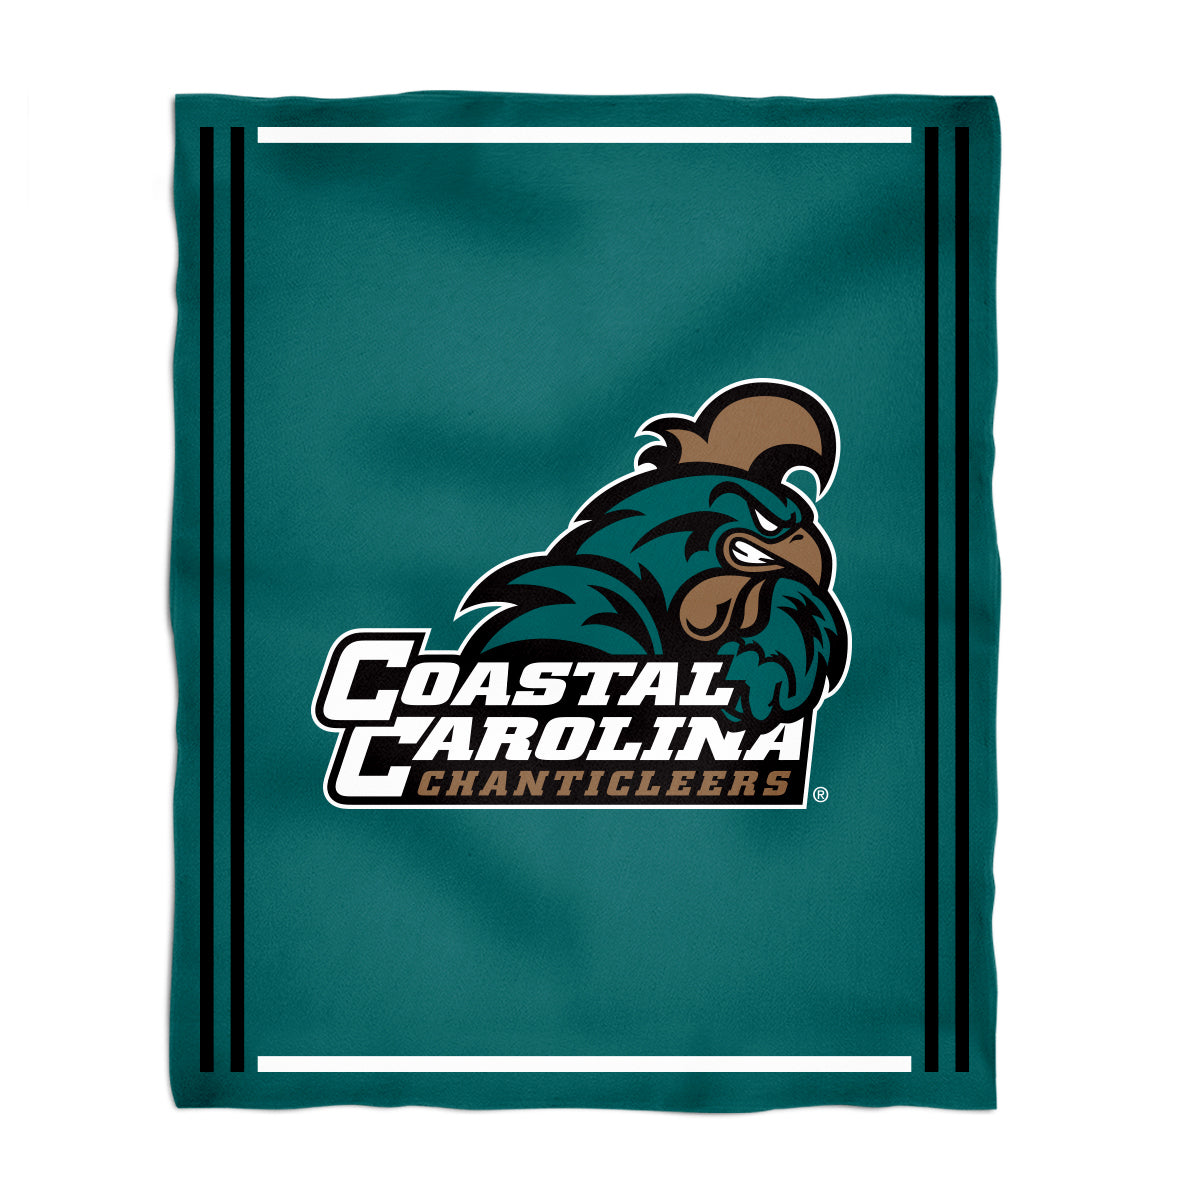 Coastal Carolina Chanticleers CCU Kids Game Day Teal Plush Soft Minky Blanket 36 x 48 Mascot